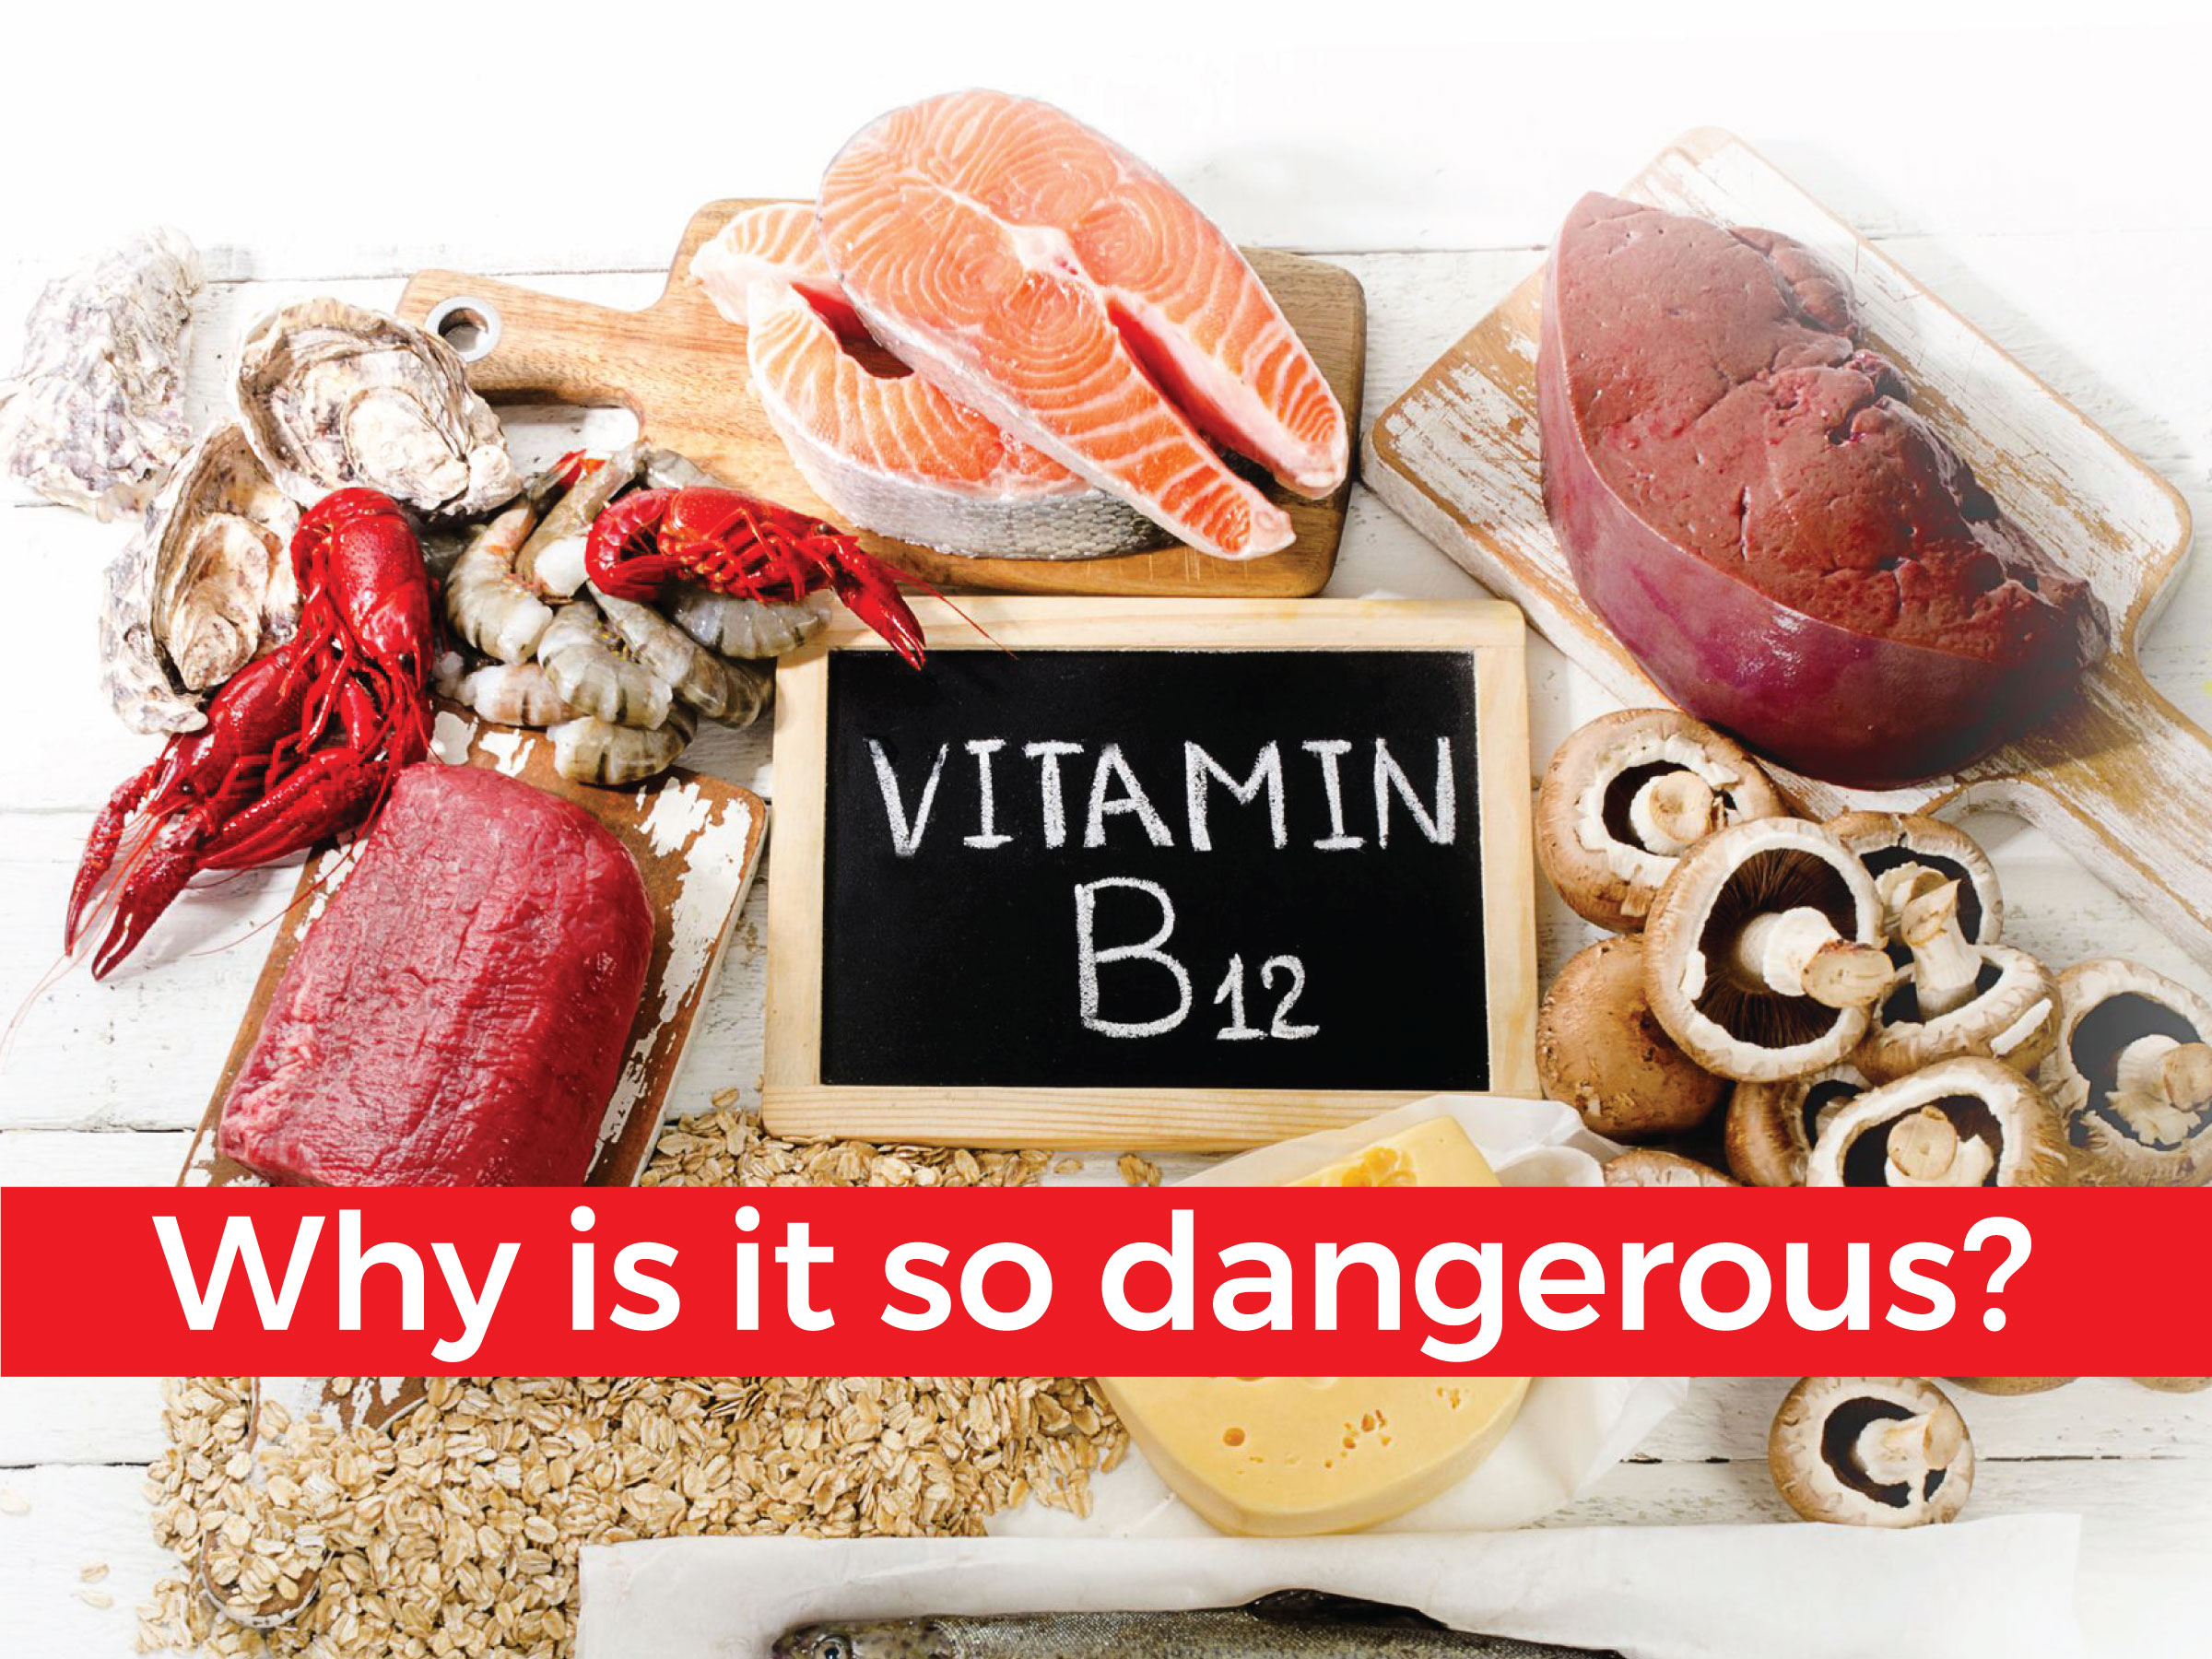 Why is vitamin B12 so dangerous